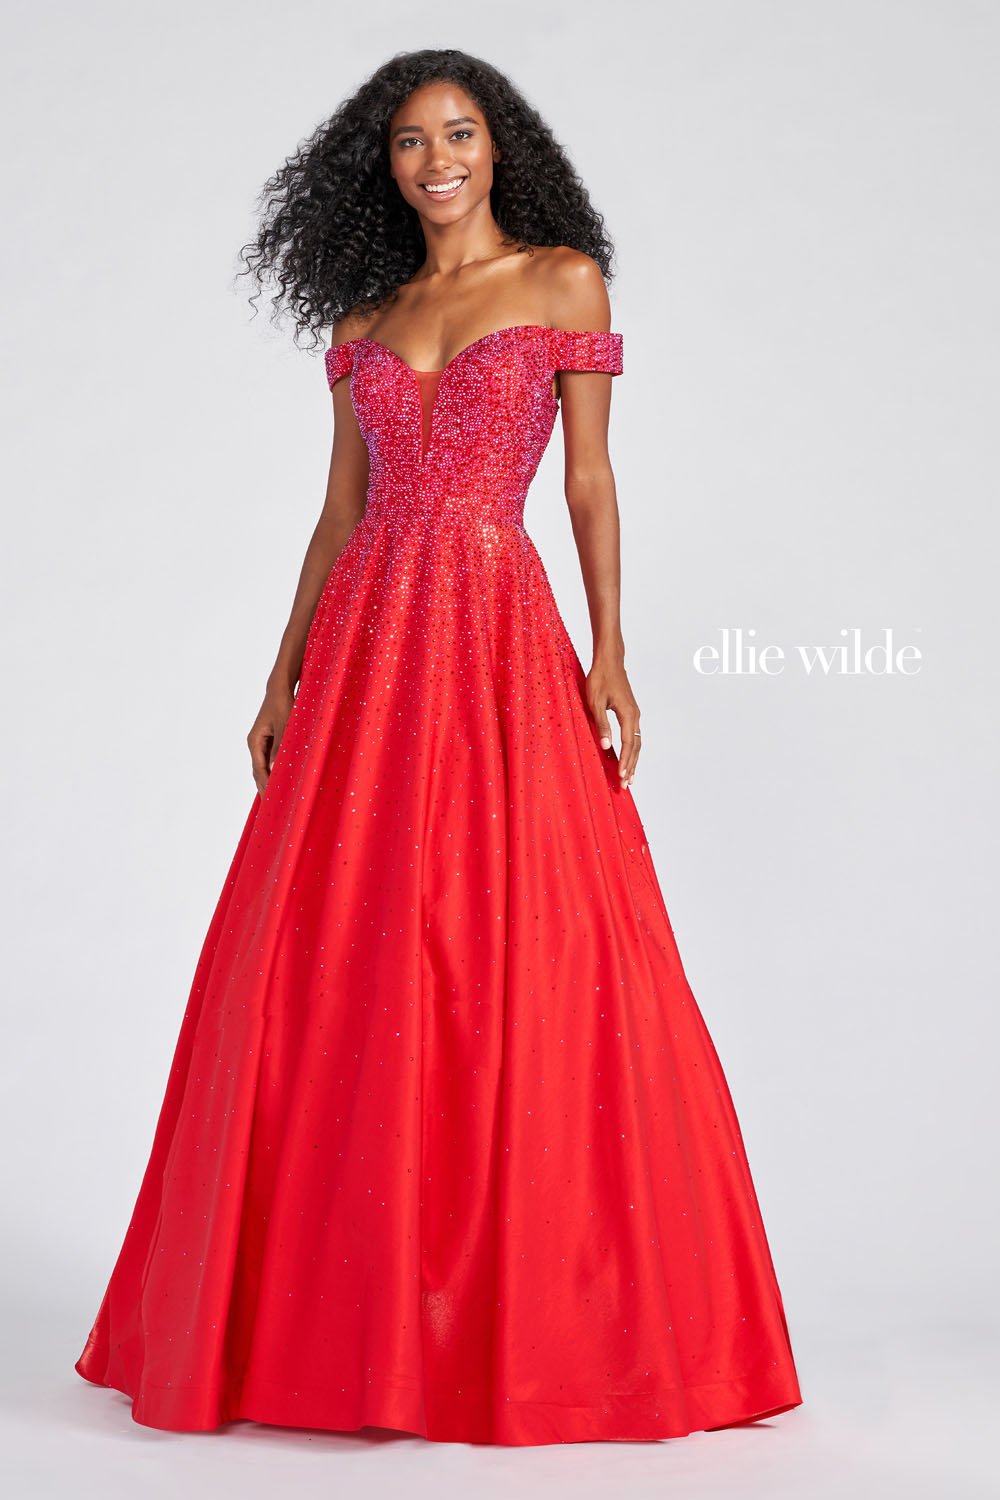 Ellie Wilde Red EW122106 Prom Dress Image.  Red formal dress.